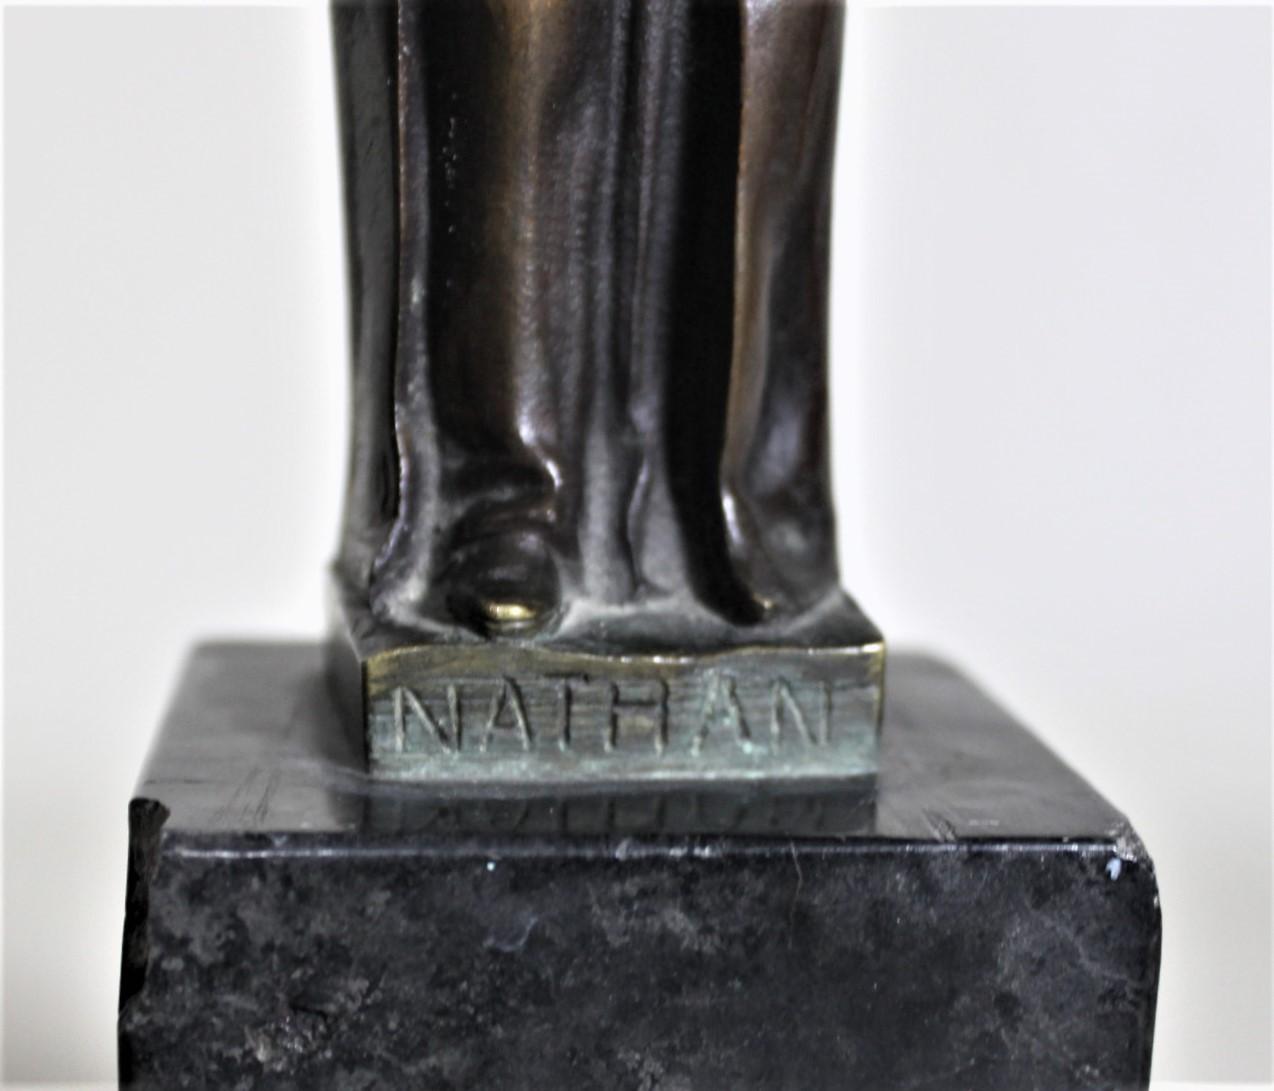 Antique Ernest Beck Patinated Bronze Sculpture of 'Nathan' on Black Marble Base For Sale 4